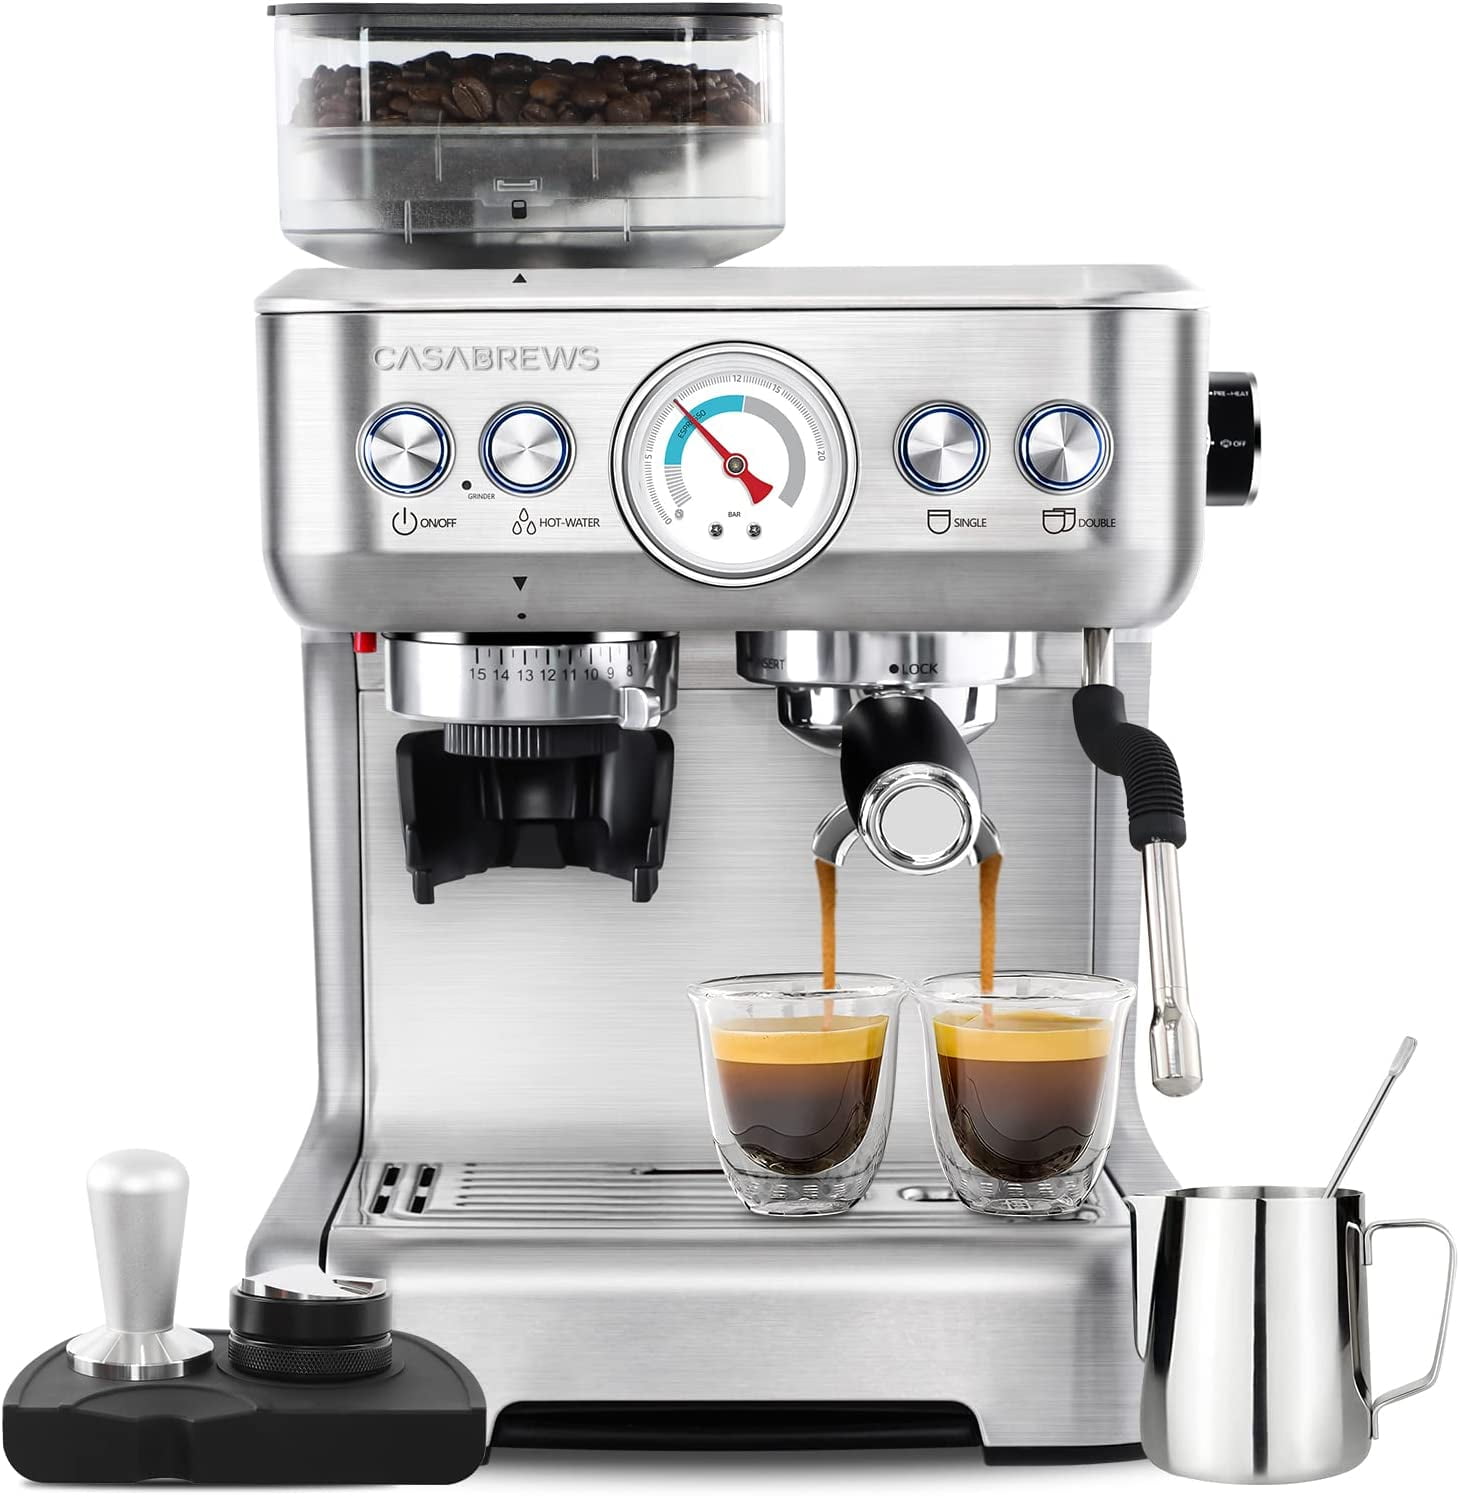 Chefman Espresso Machine, 7.5 Cups, Stainless Steel Black, Digital Barista  Pro Plus Espresso Machine with Milk Frother RJ54-BP-BLACK - The Home Depot